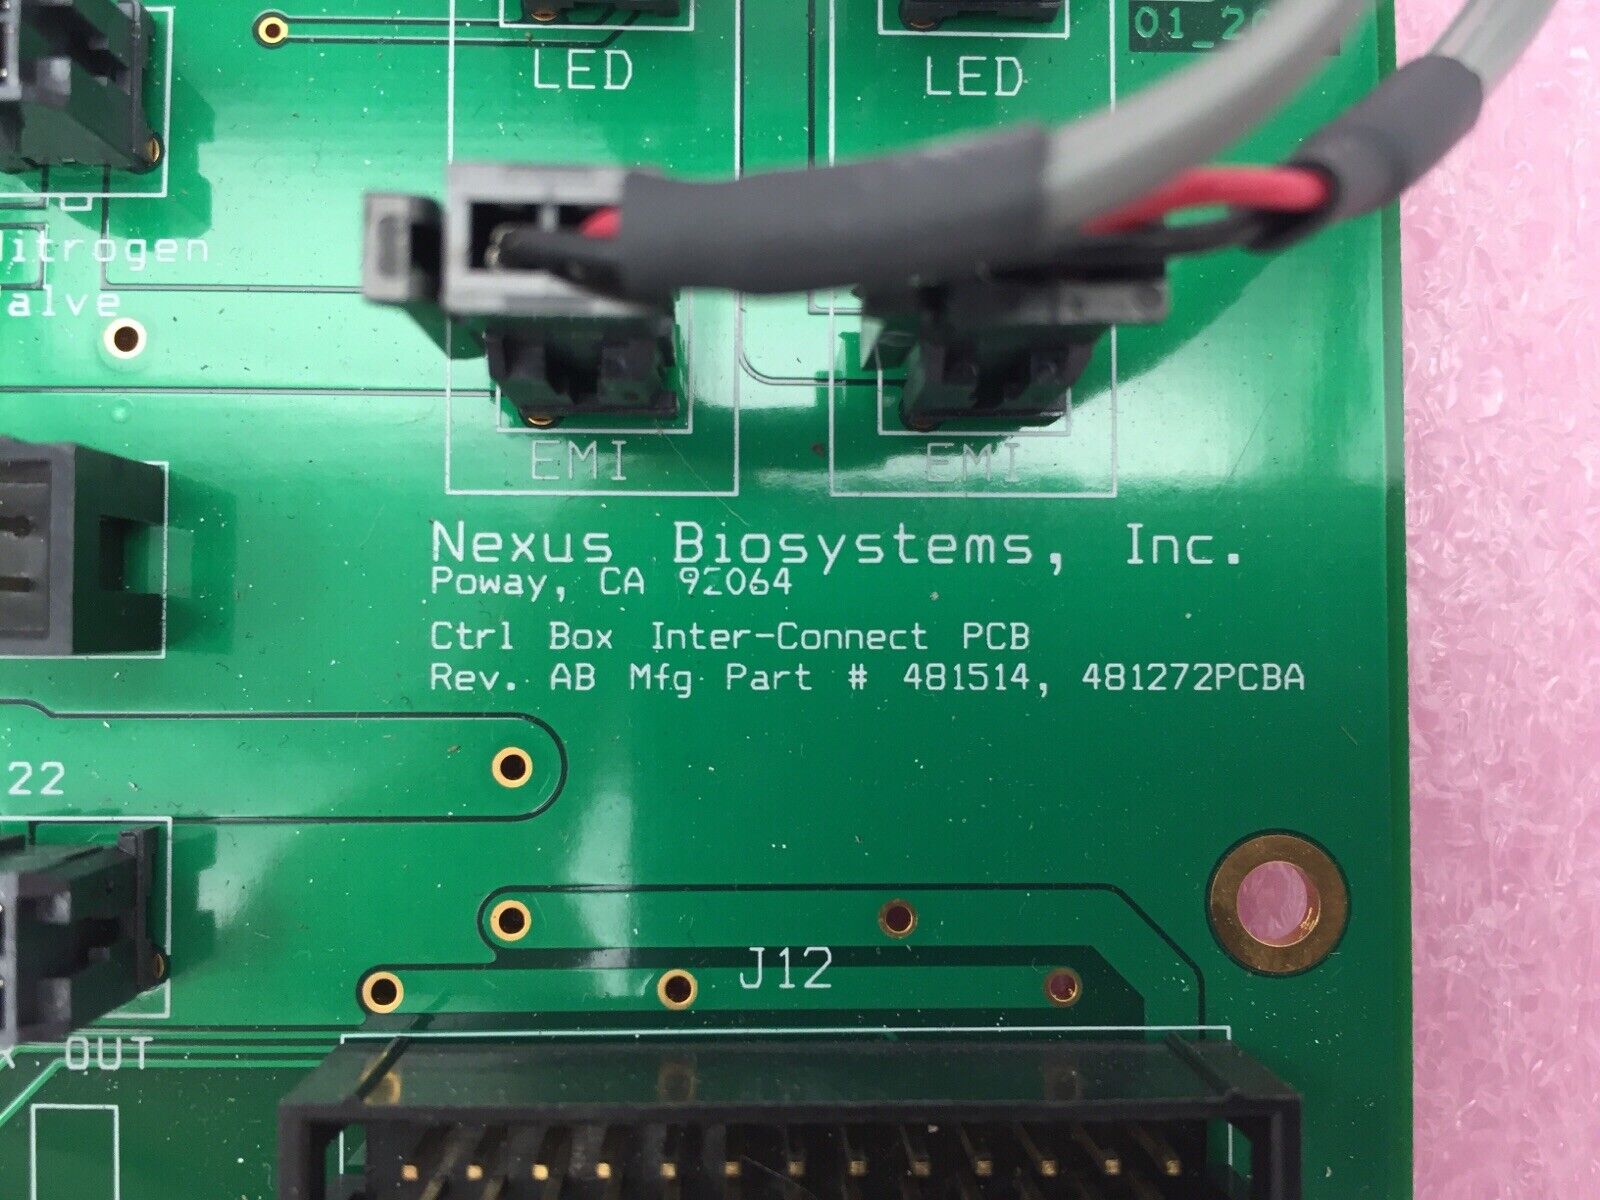 Nexus BioSystems 481514 PCB - Rev. AB - Replacement Part